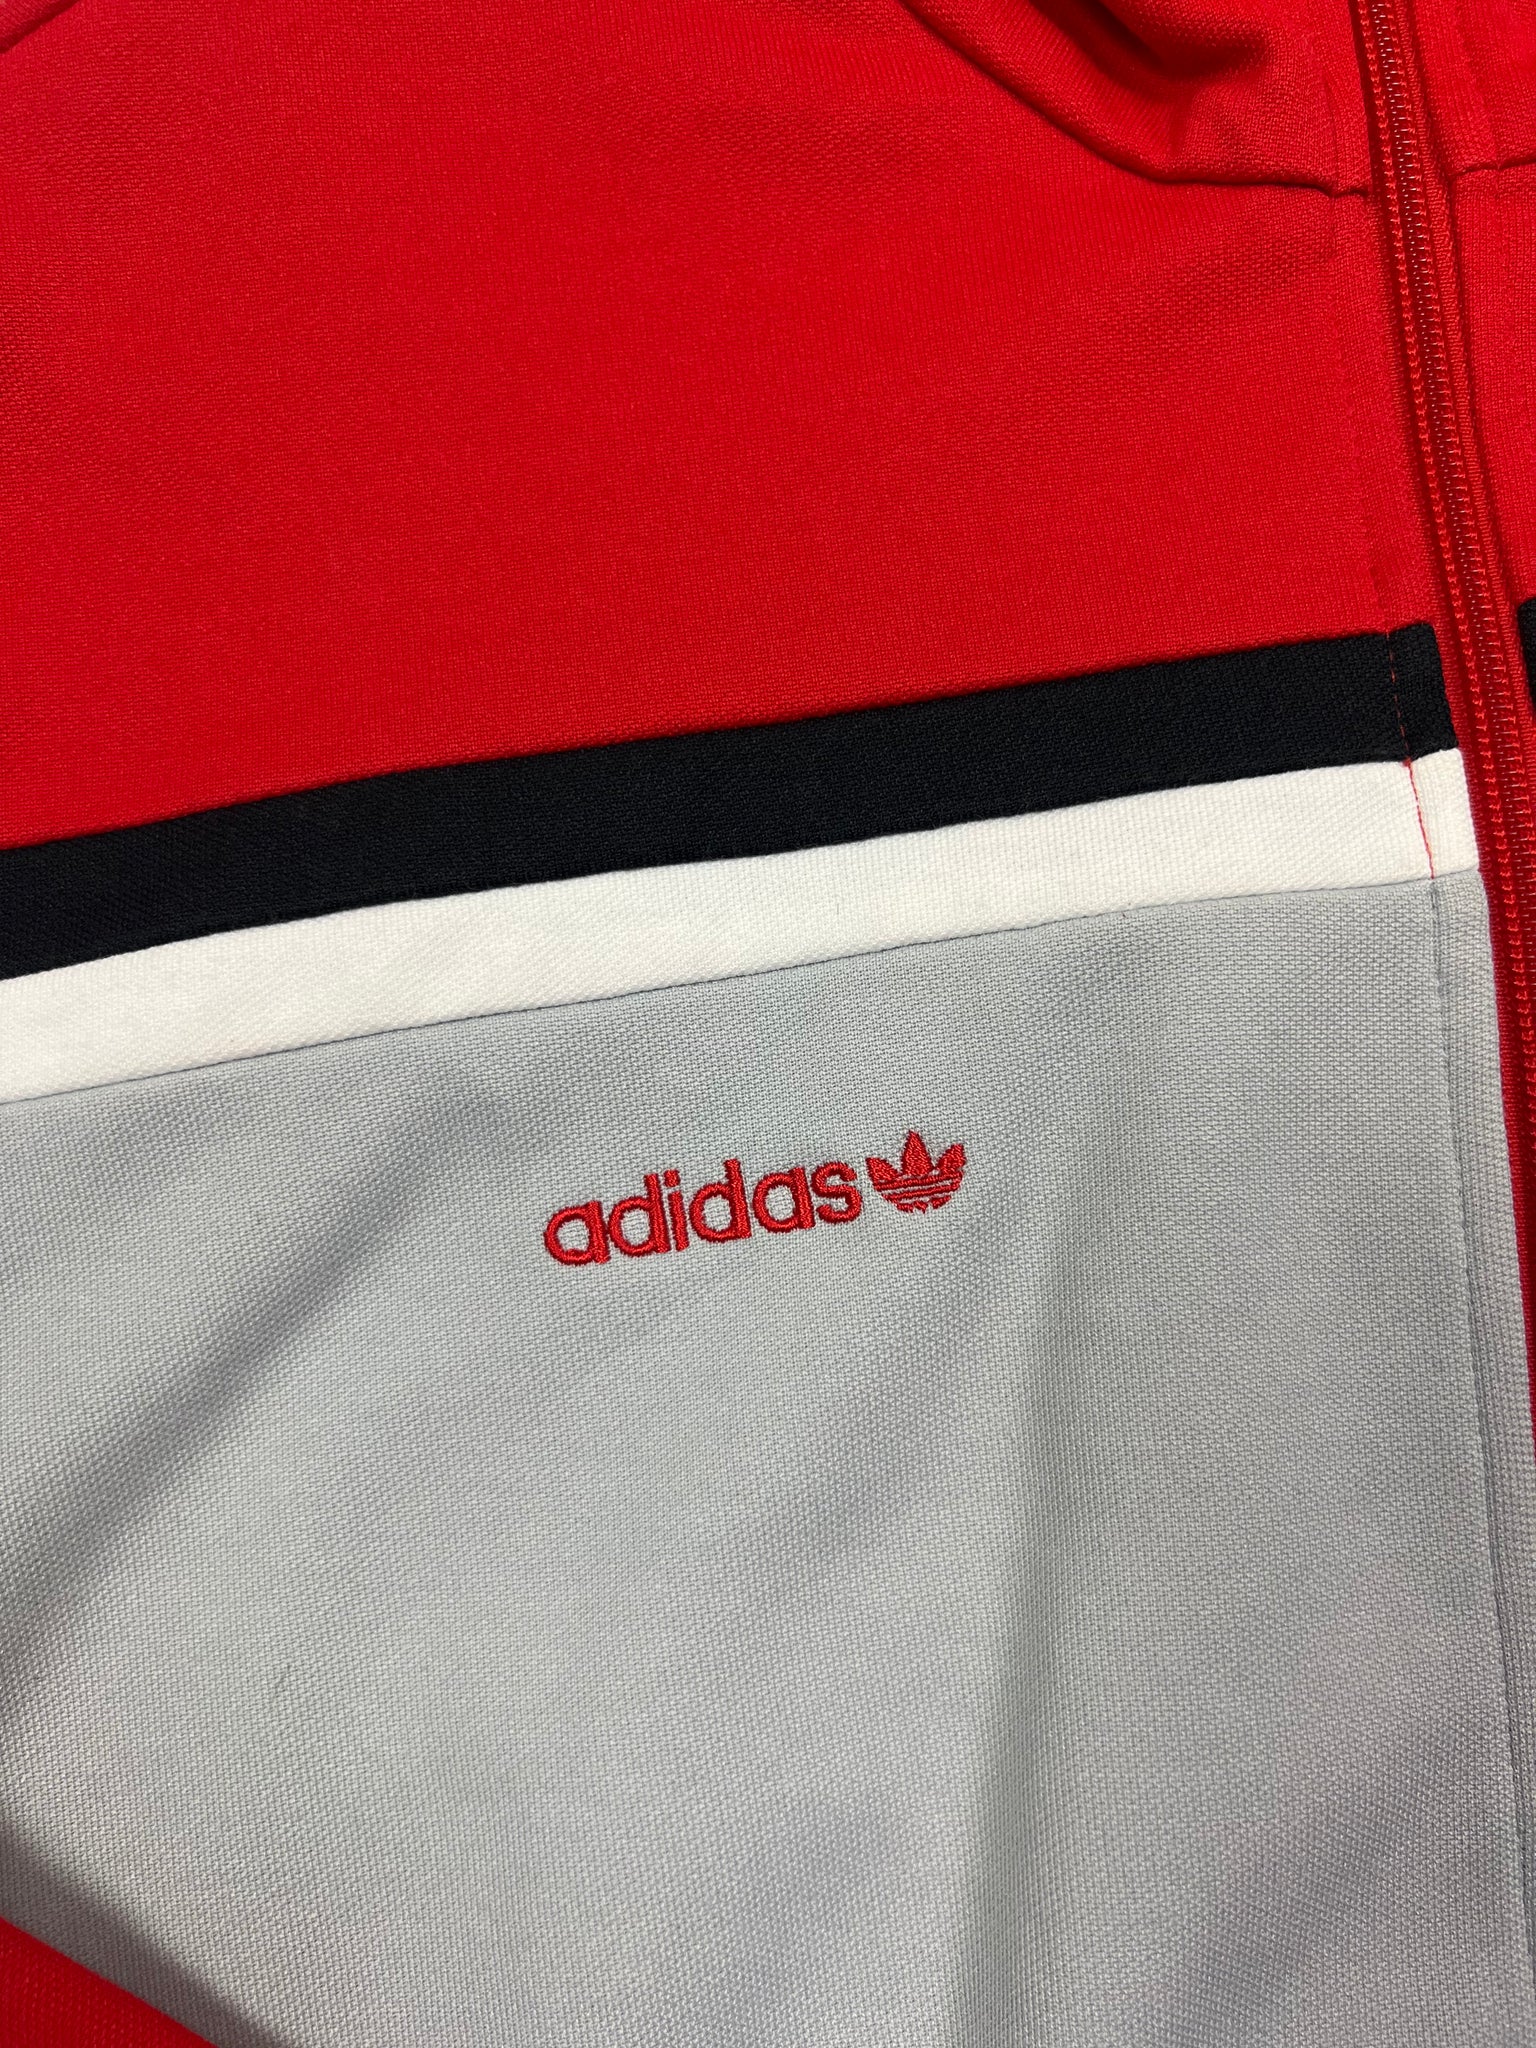 Adidas Track Jacket (L)